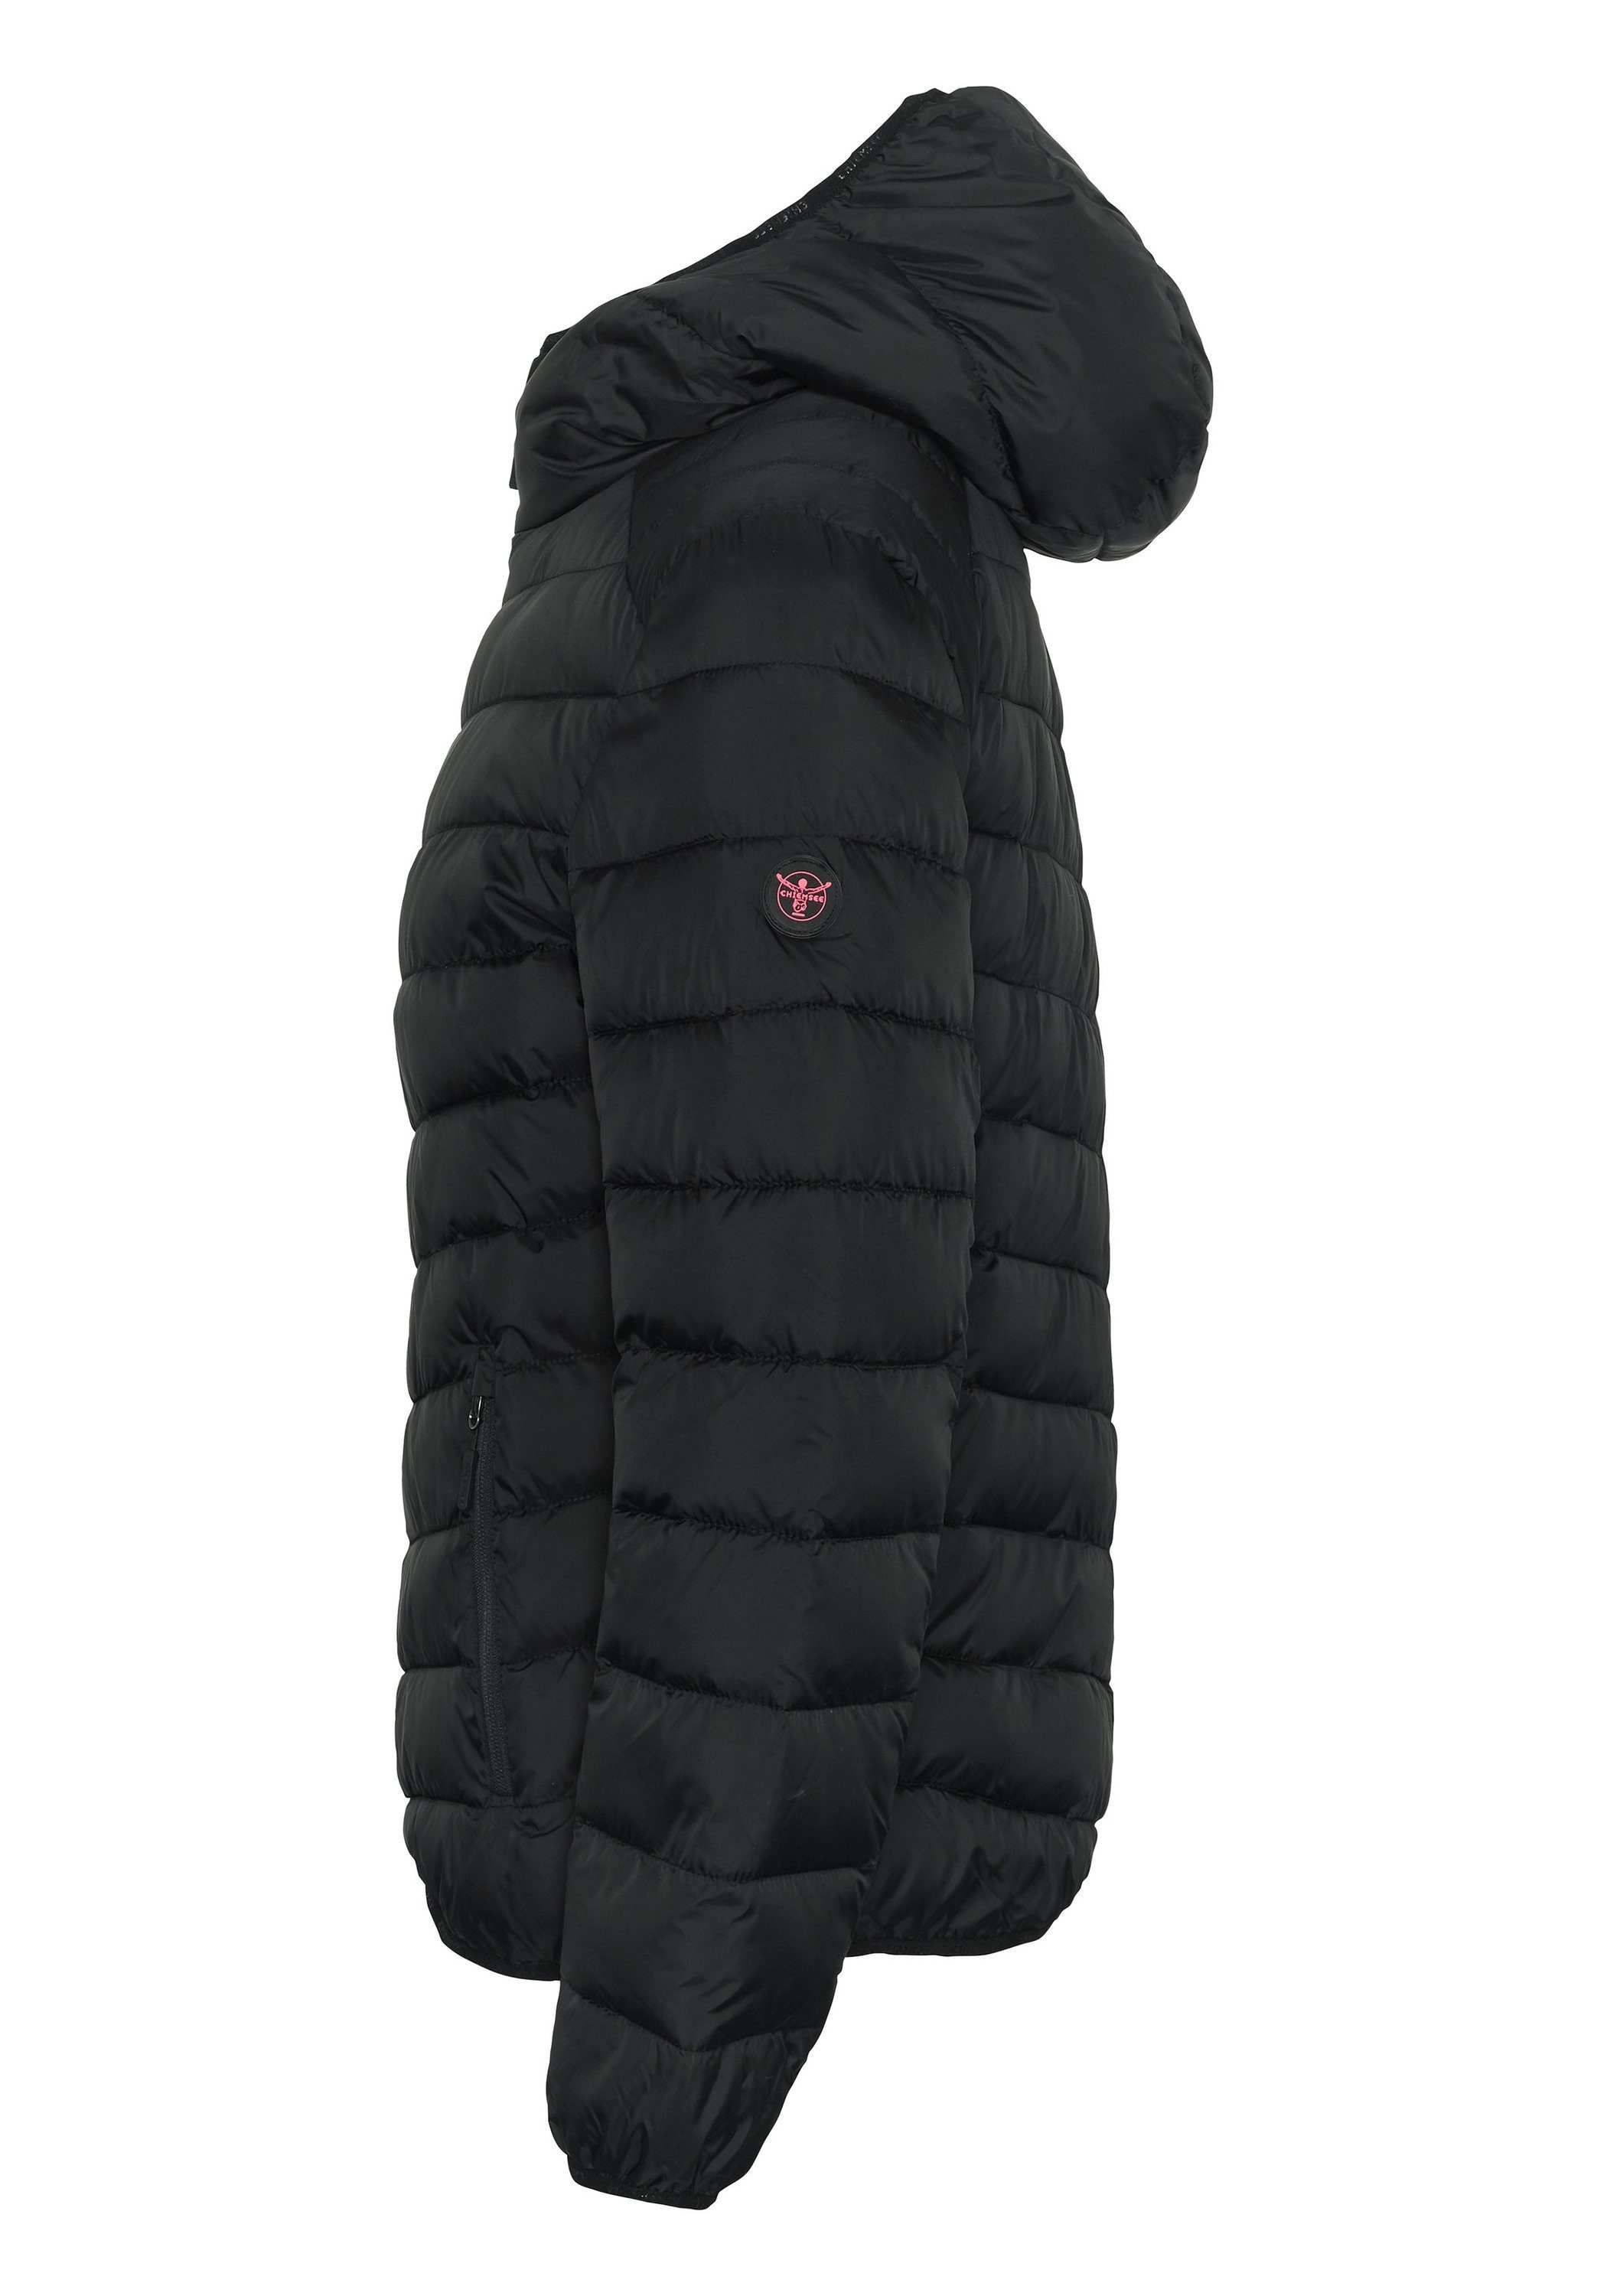 Stepp-Optik moderner Chiemsee in Wattierte Jacke 1 schwarz Outdoorjacke